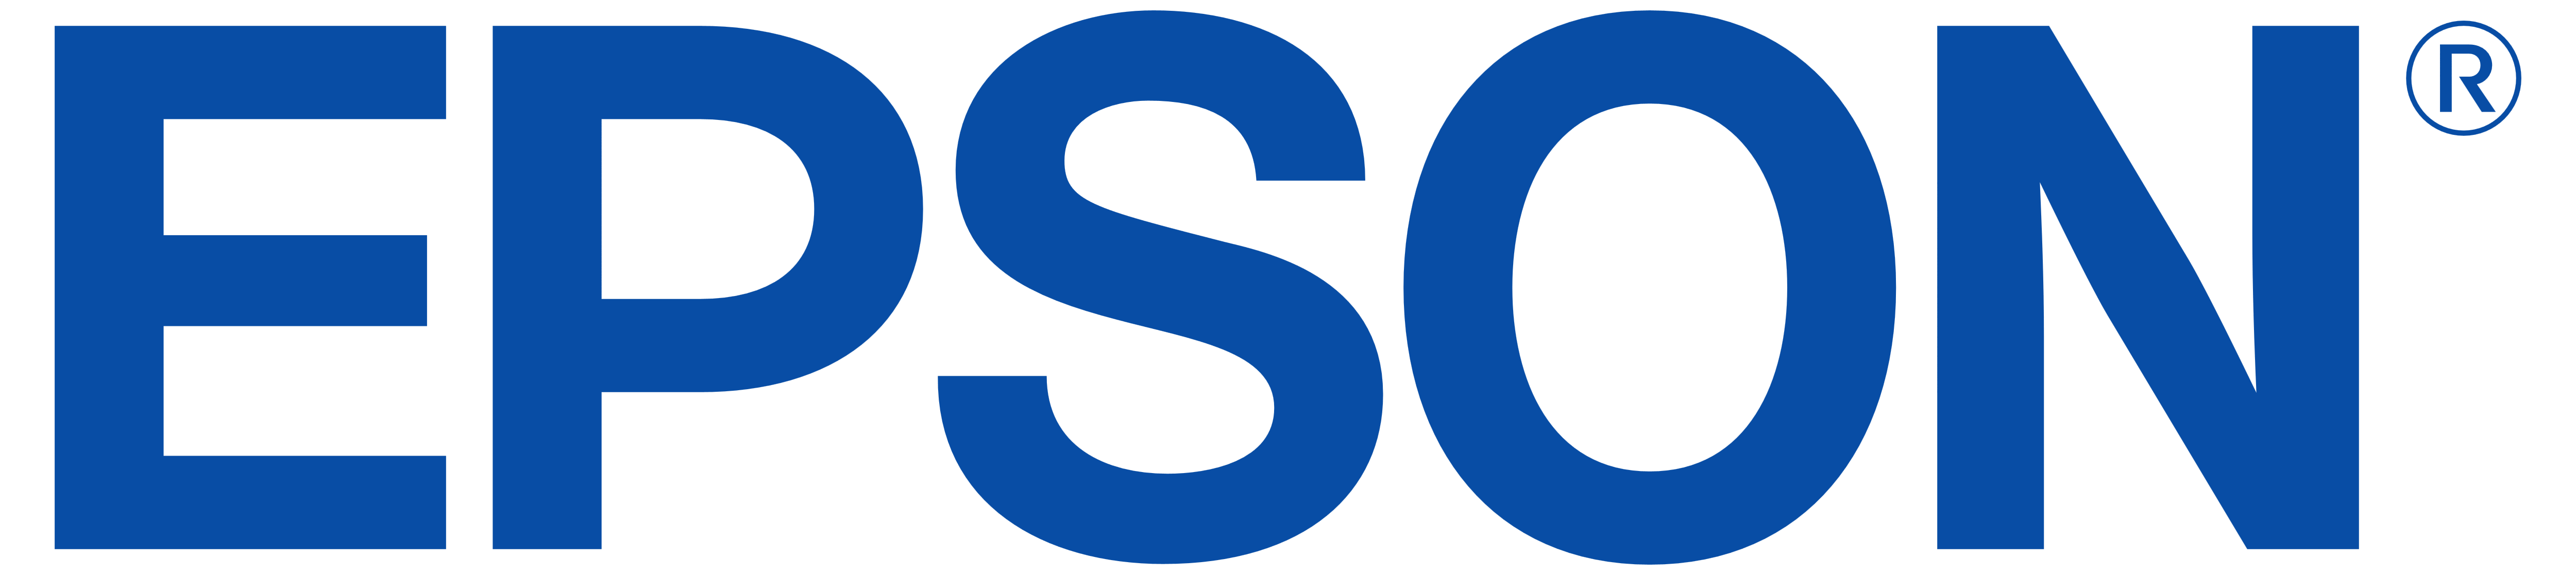 Epson Logo Wallpaper